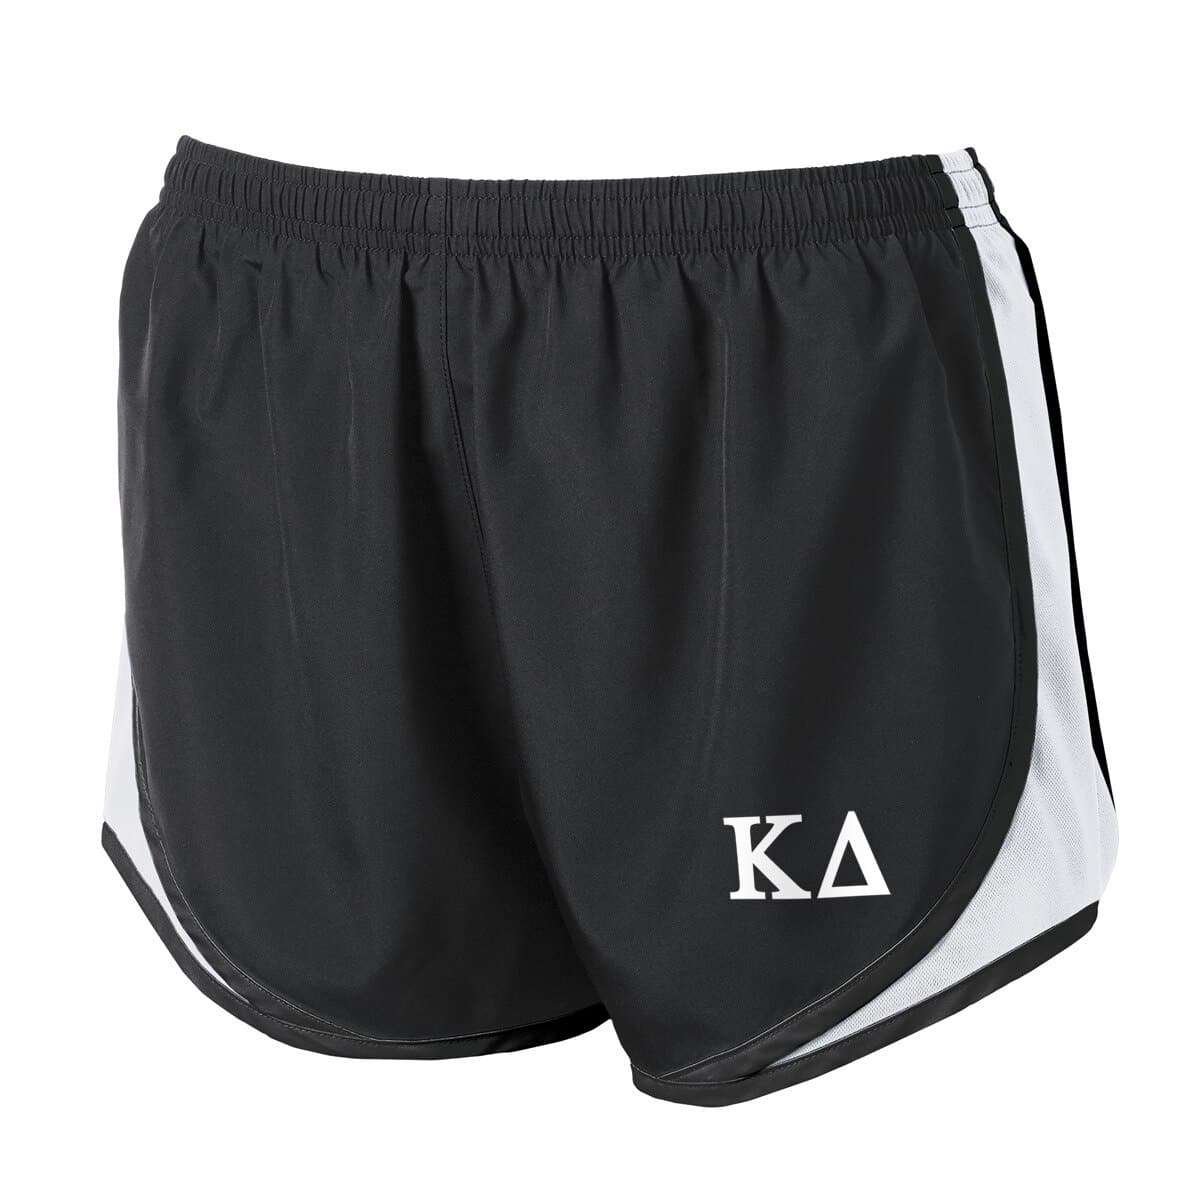 Kappa Delta Running Shorts | Kappa Delta | Apparel > Shorts